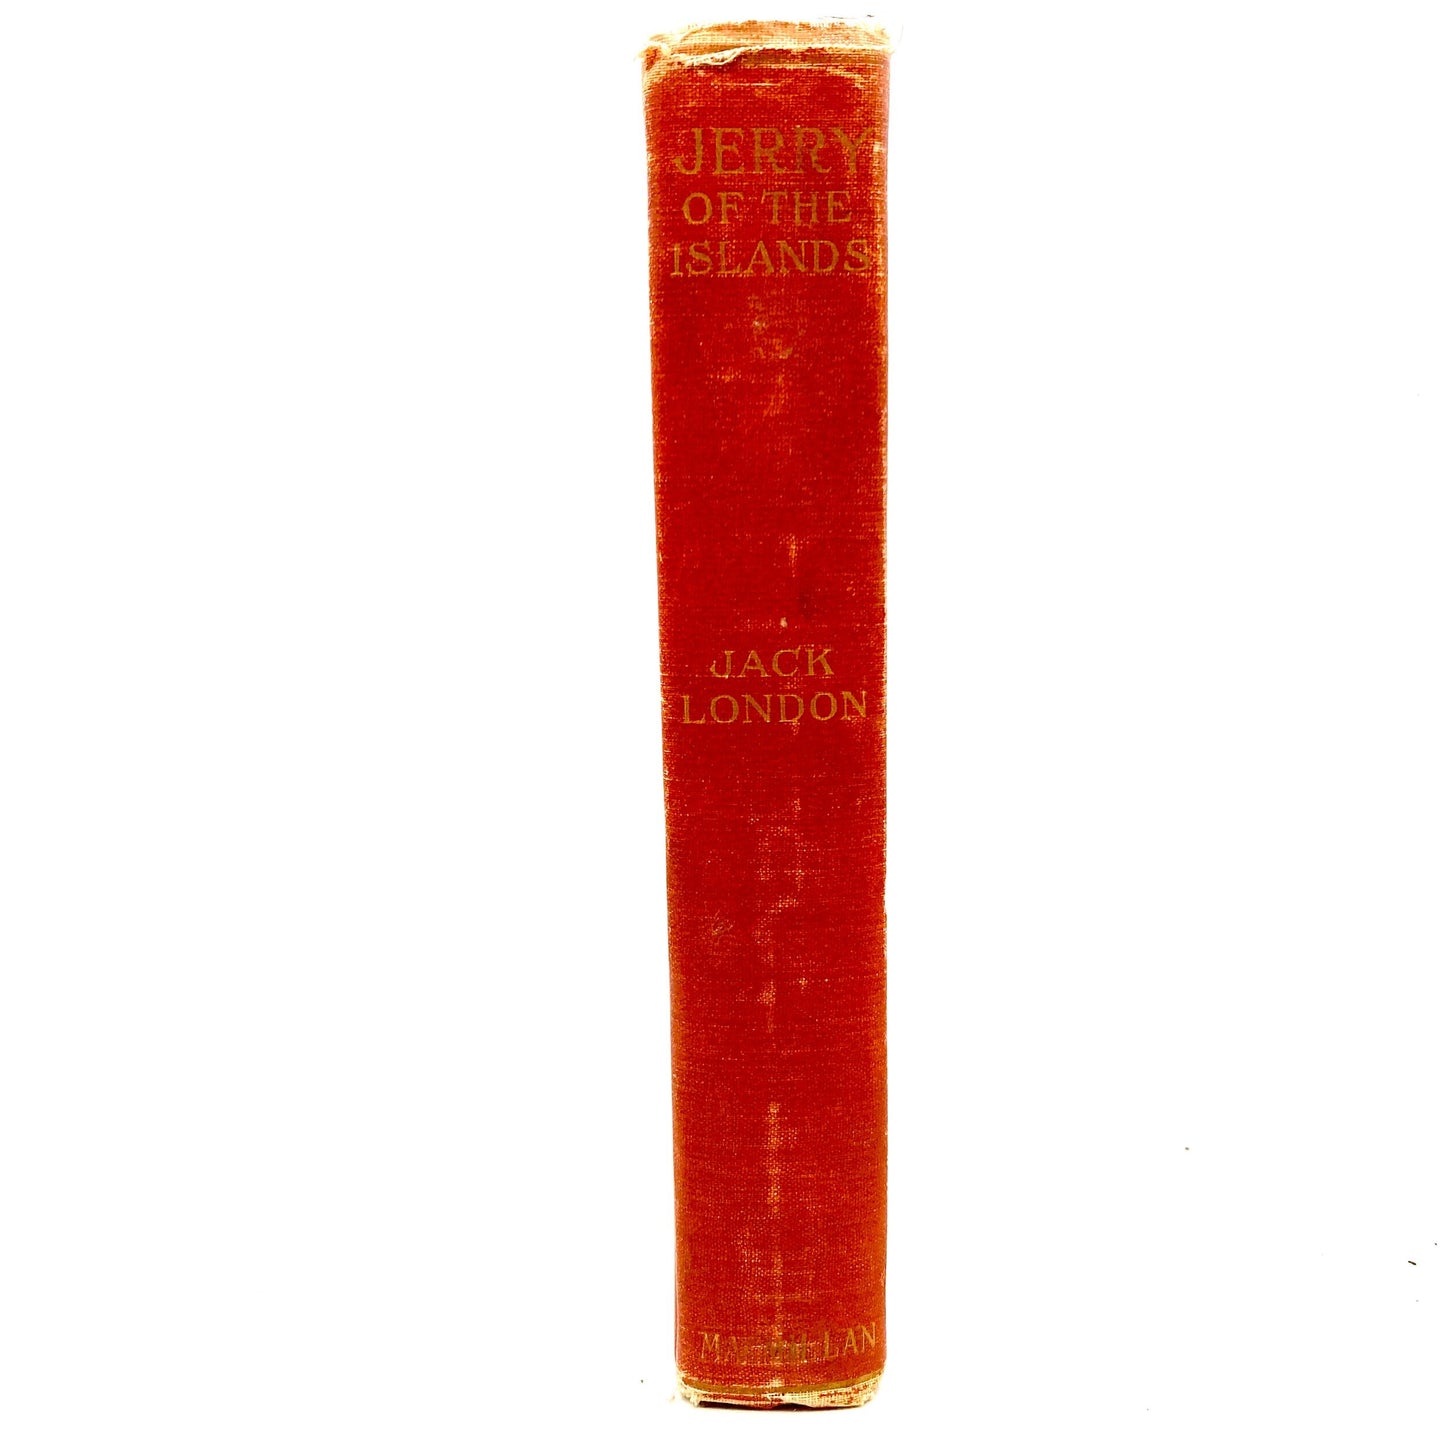 LONDON, Jack "Jerry of the Islands" [Macmillan, 1917] 1st Edition - Buzz Bookstore